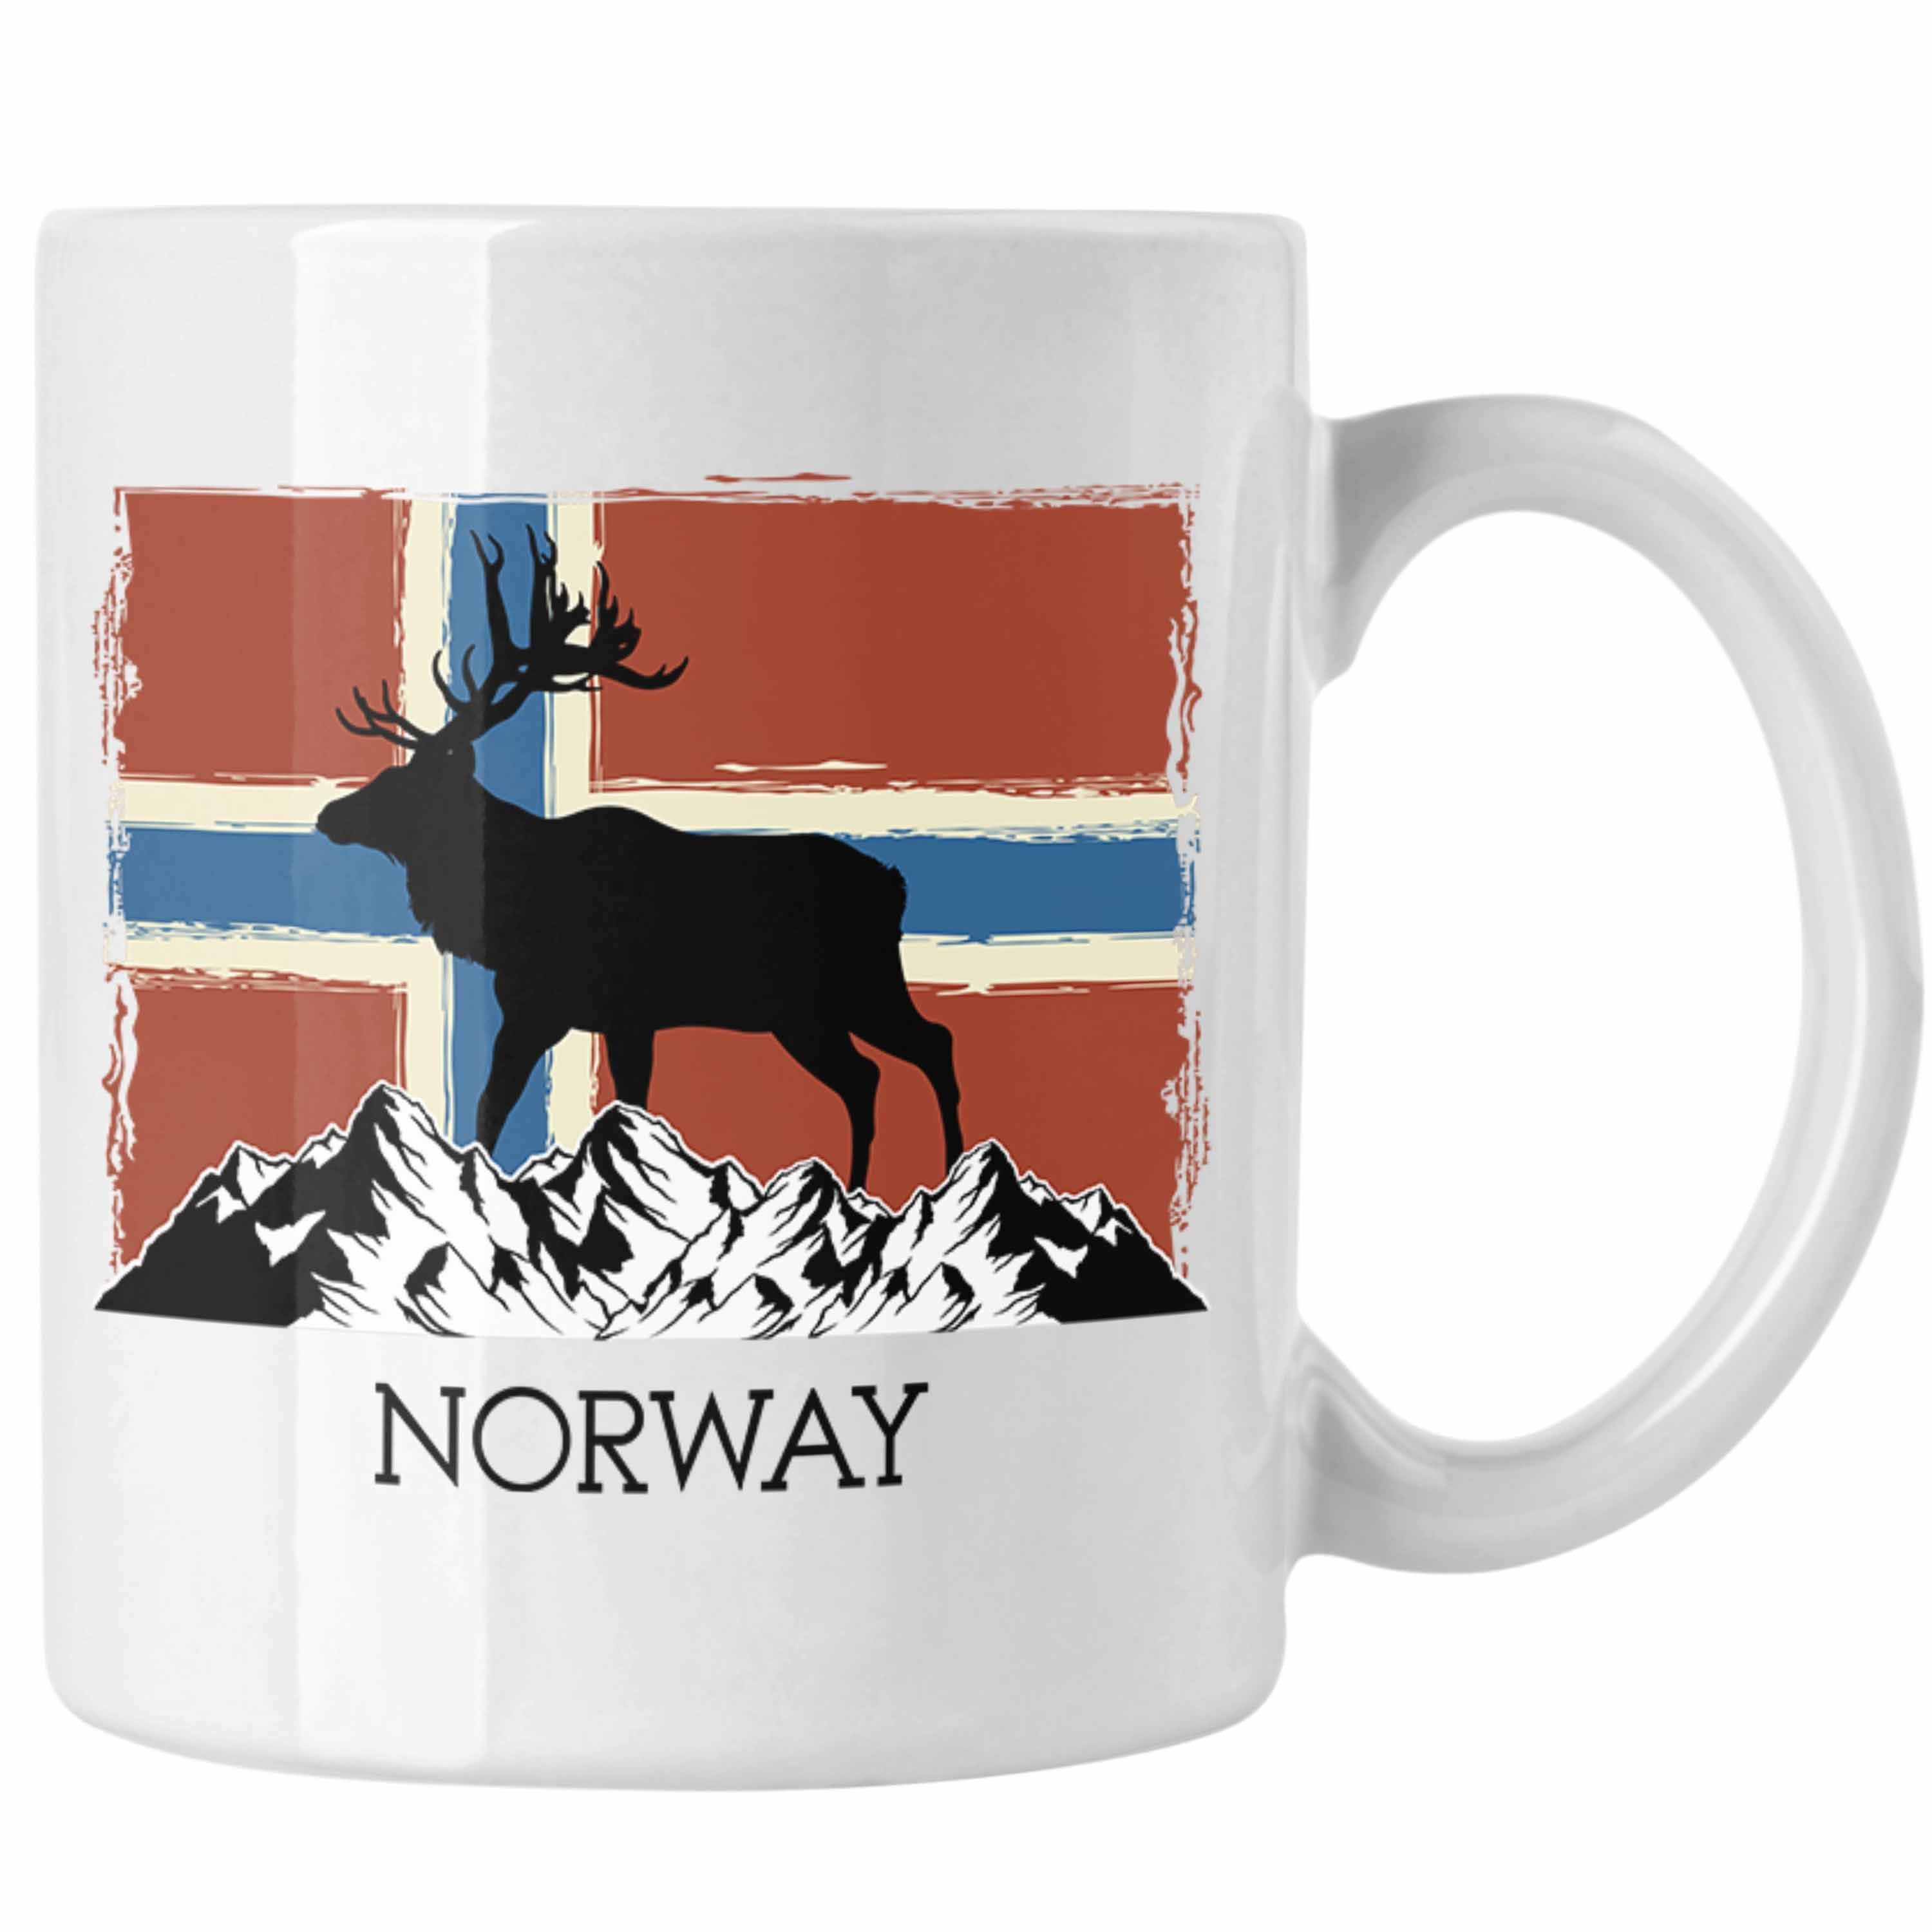 Trendation Tasse Trendation - Norwegen Weiss Geschenke Flagge Norway Tasse Nordkap Elch